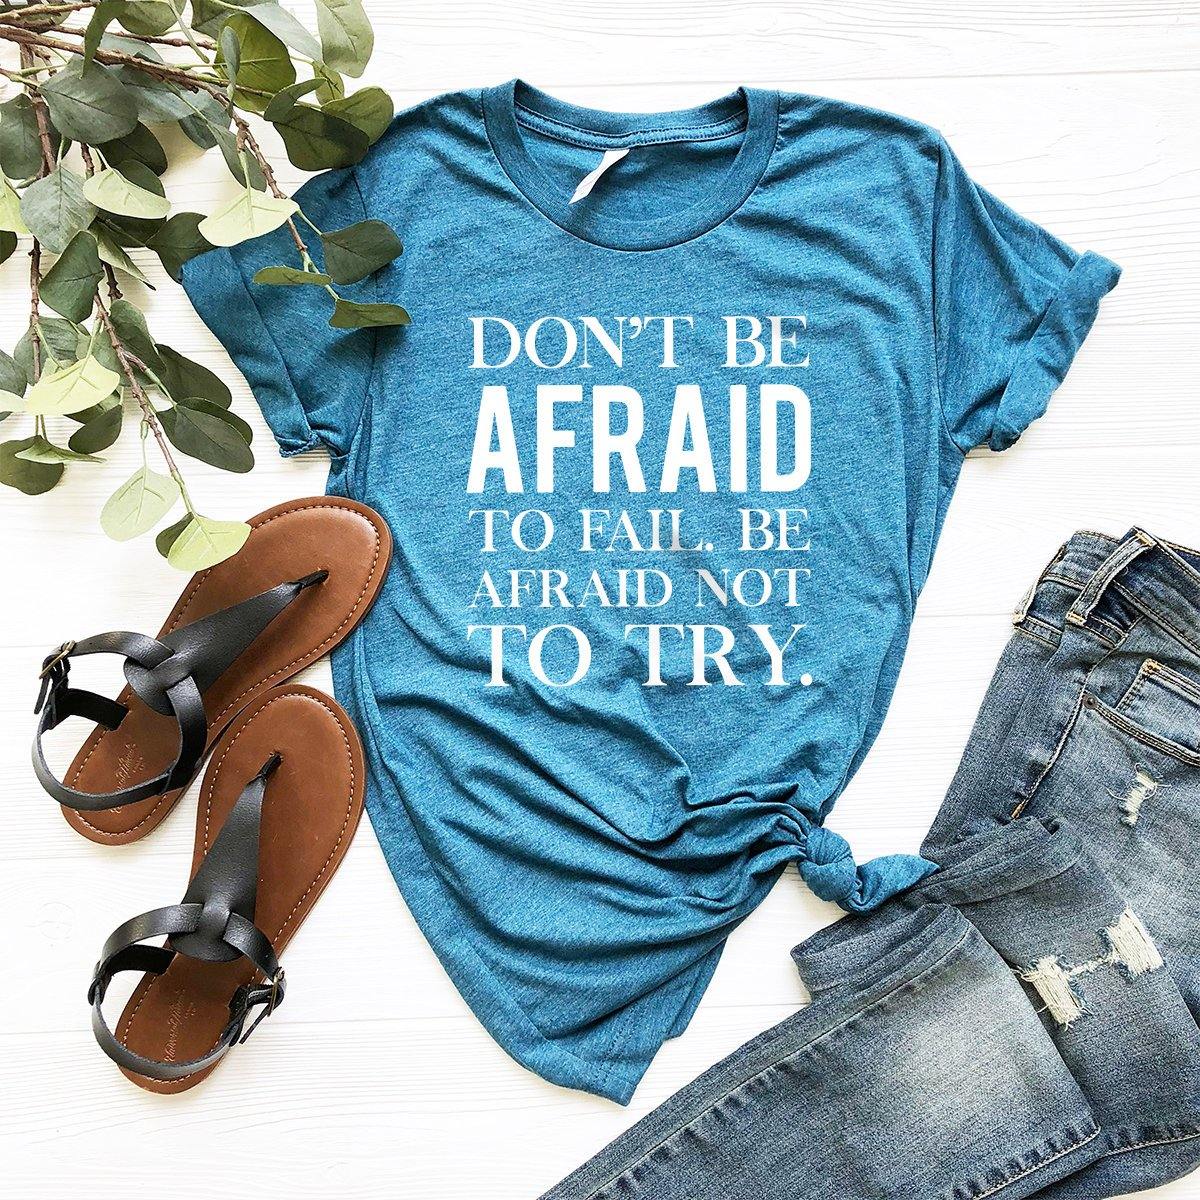 Motivational Shirt, Inspirational Shirt, Don't Be Afraid To Fail Be Afraid Not To Try, Workout Shirt, Inspirational Quote Shirt, Funny shirt - Fastdeliverytees.com